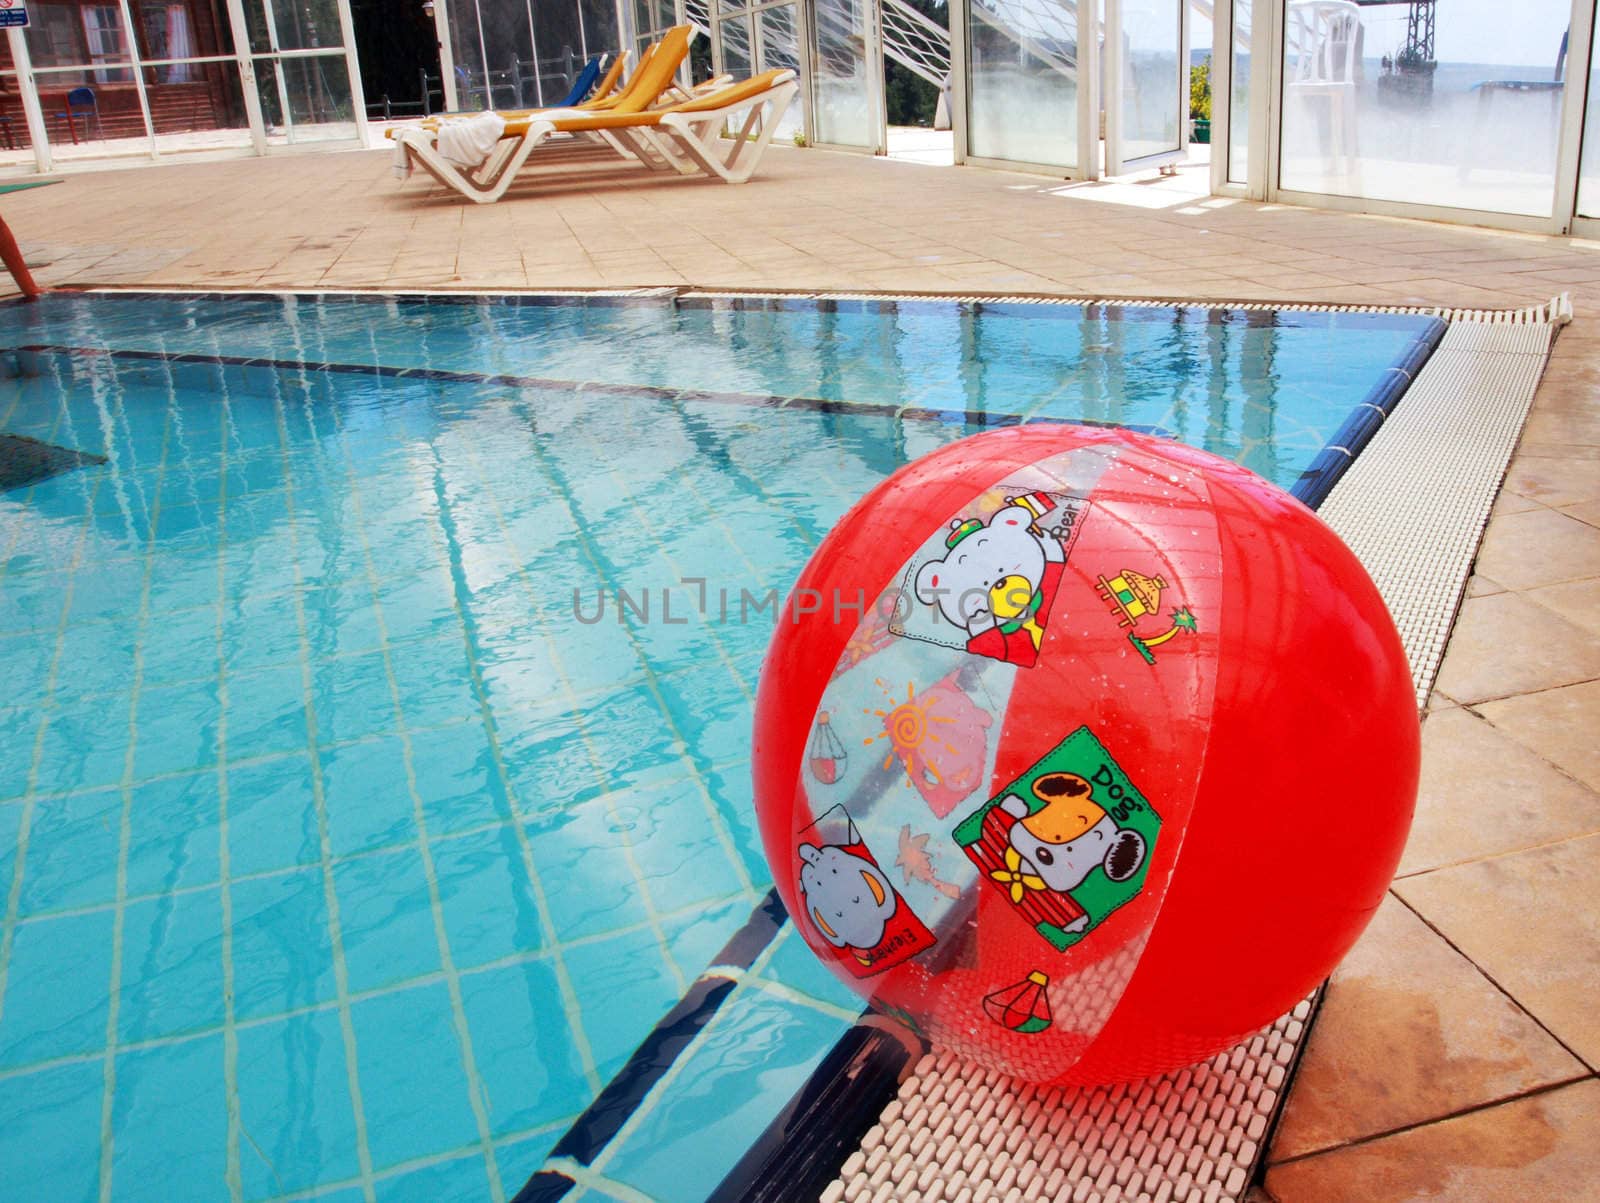 Red ball in a swimming pool by shokochka